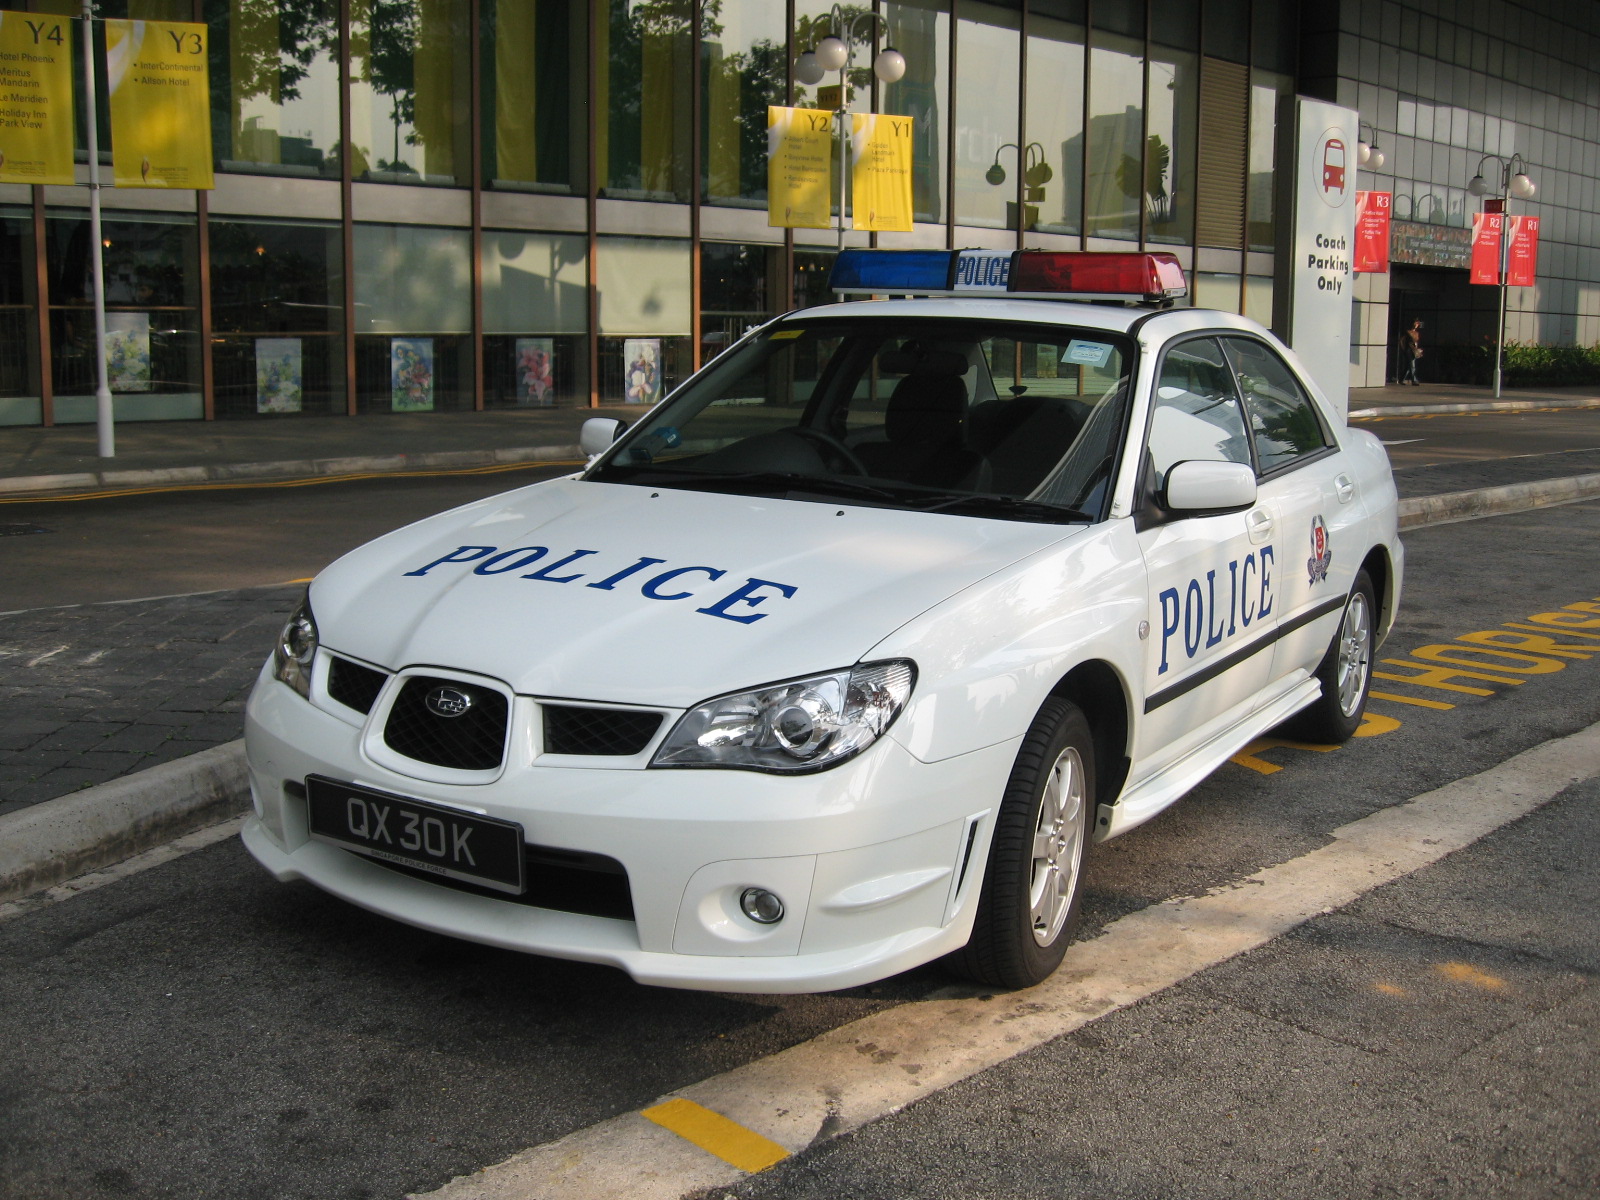 Subaru_police_car.JPG